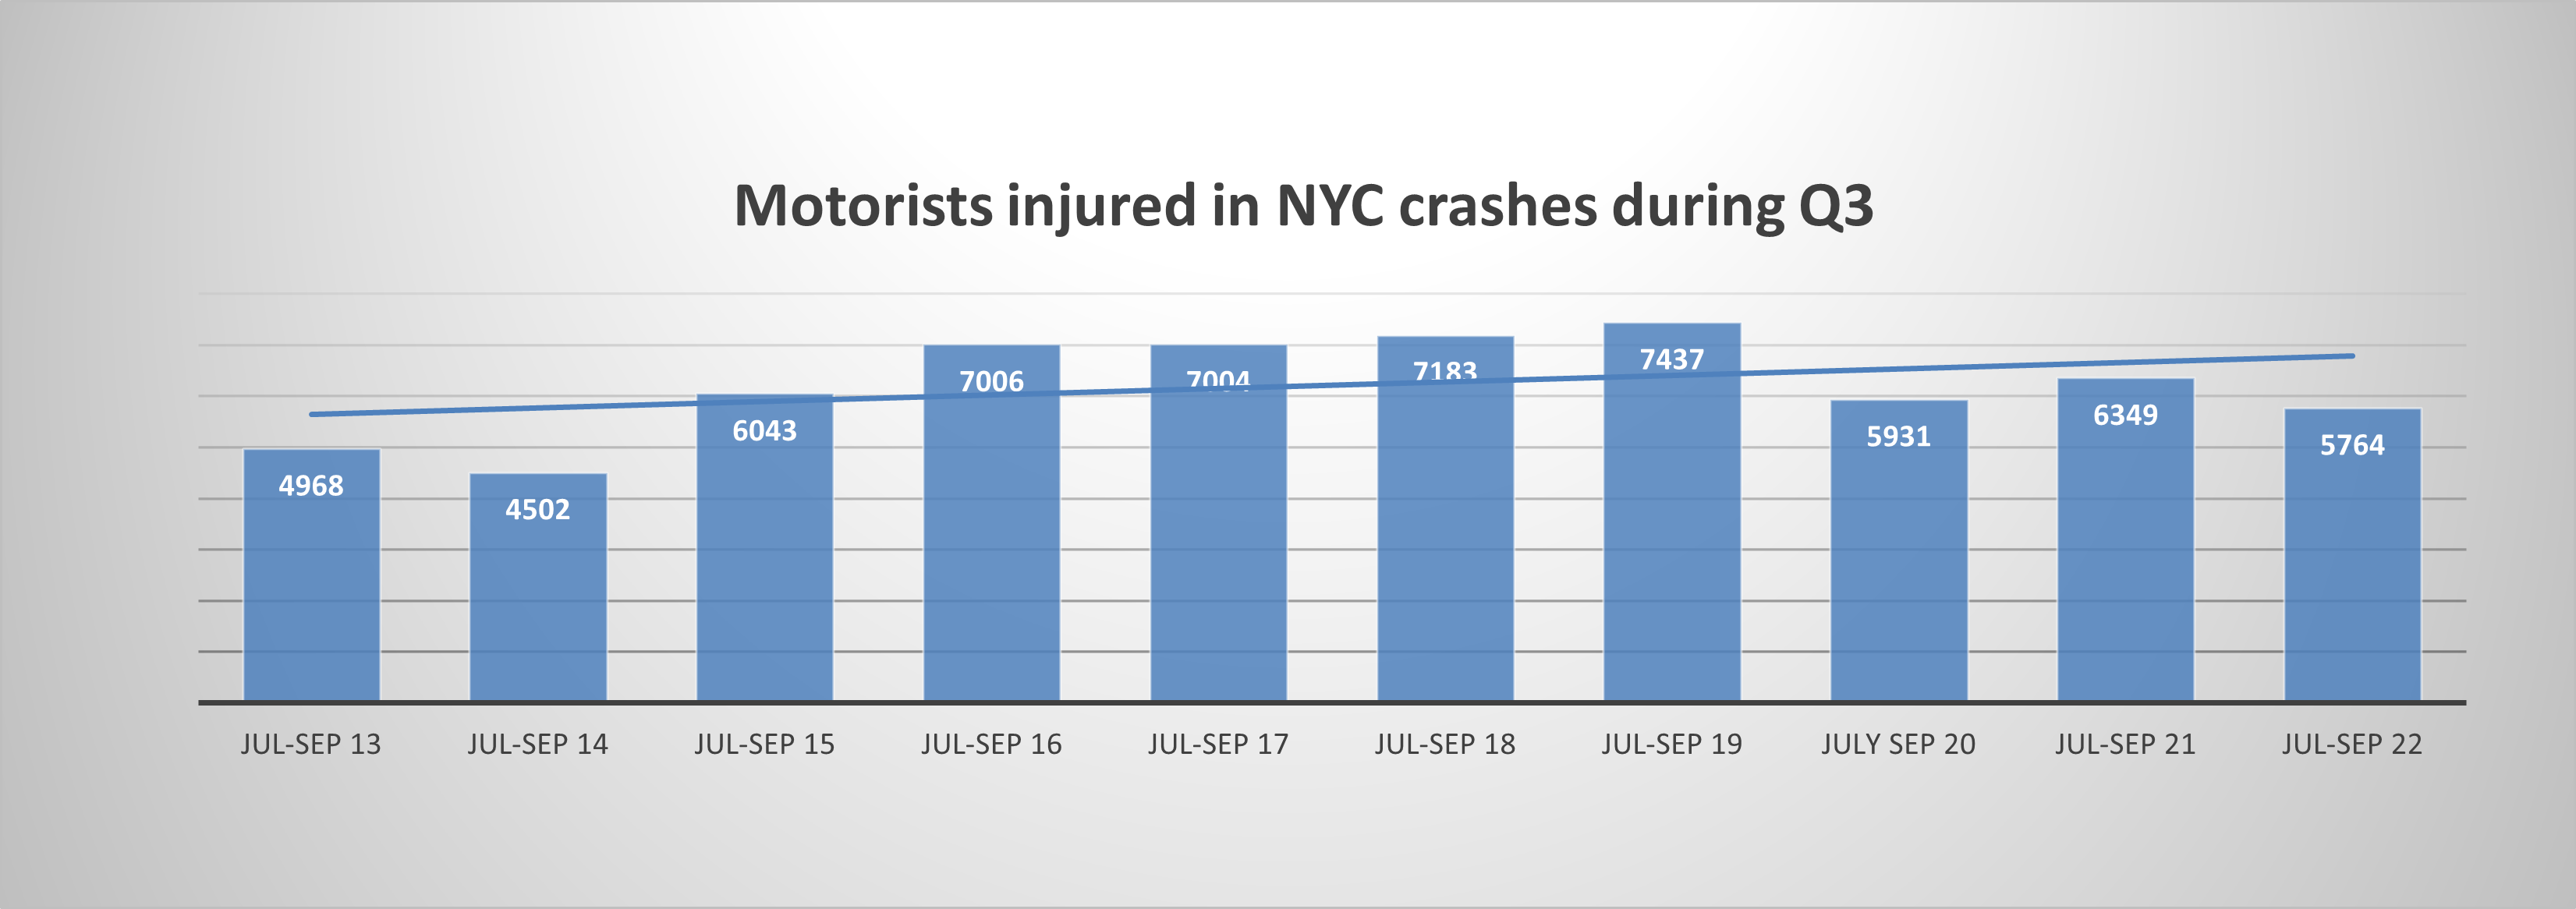 Motorist-injured-in-NYC-Q3-2022-1